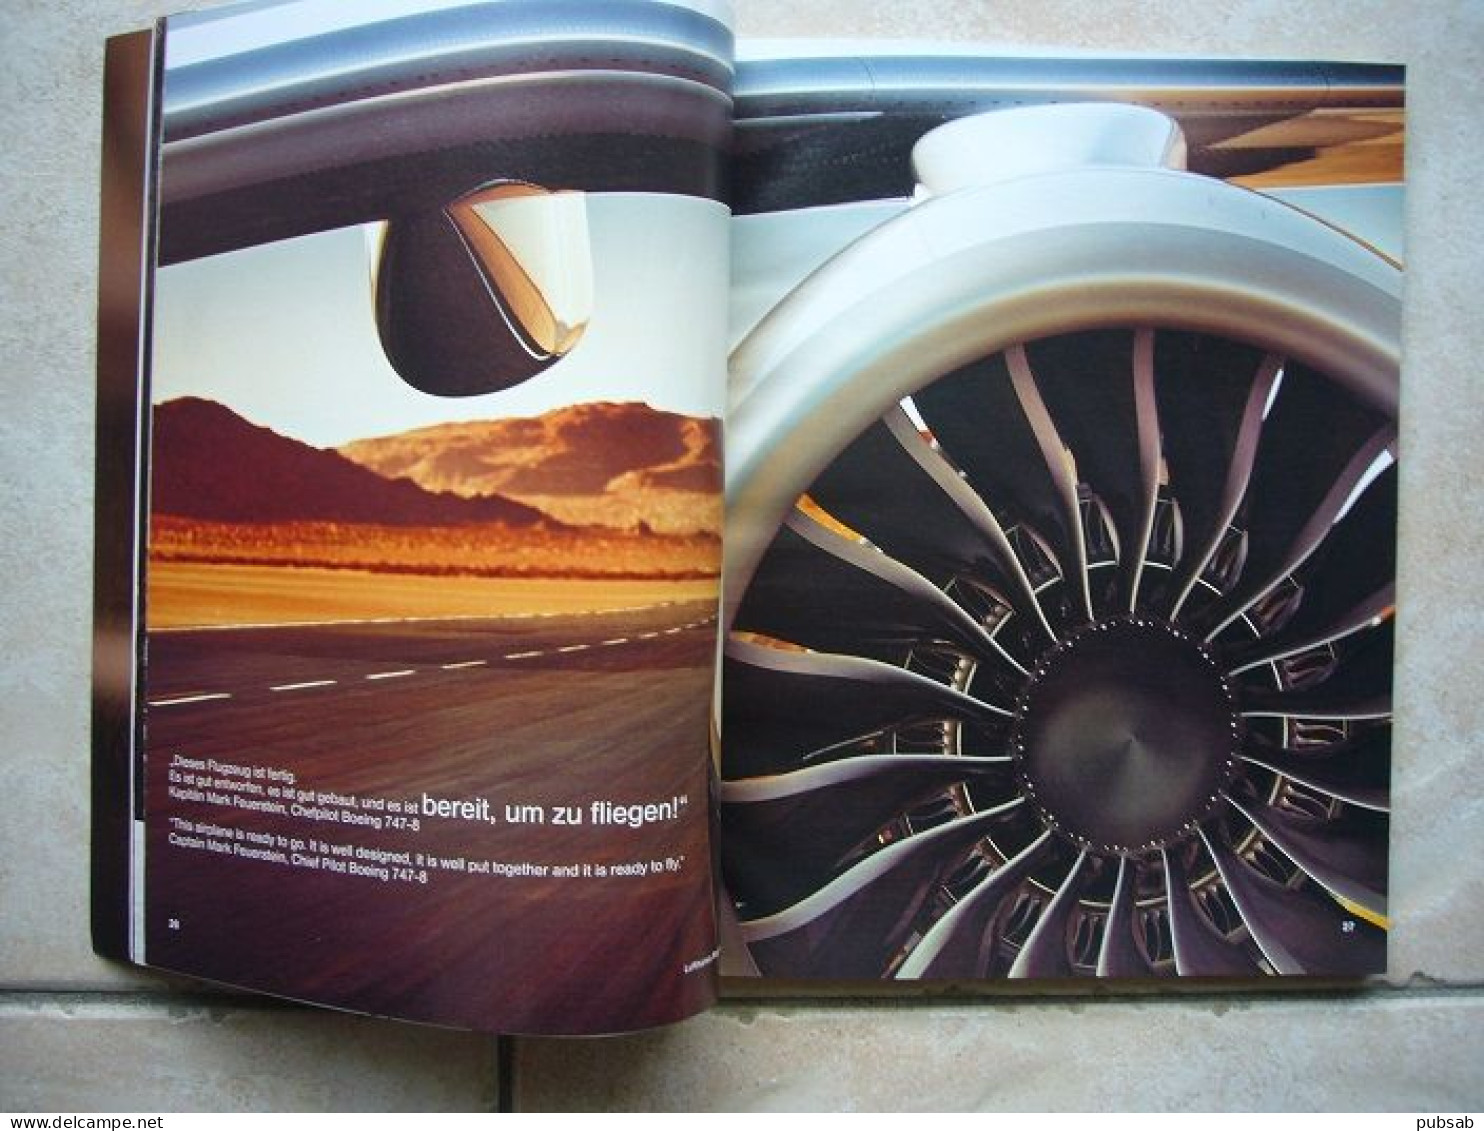 Avion / Airplane / LUFTHANSA / Boeing 747-8 / 130 Pages / Edition Allemande - Inflight Magazines